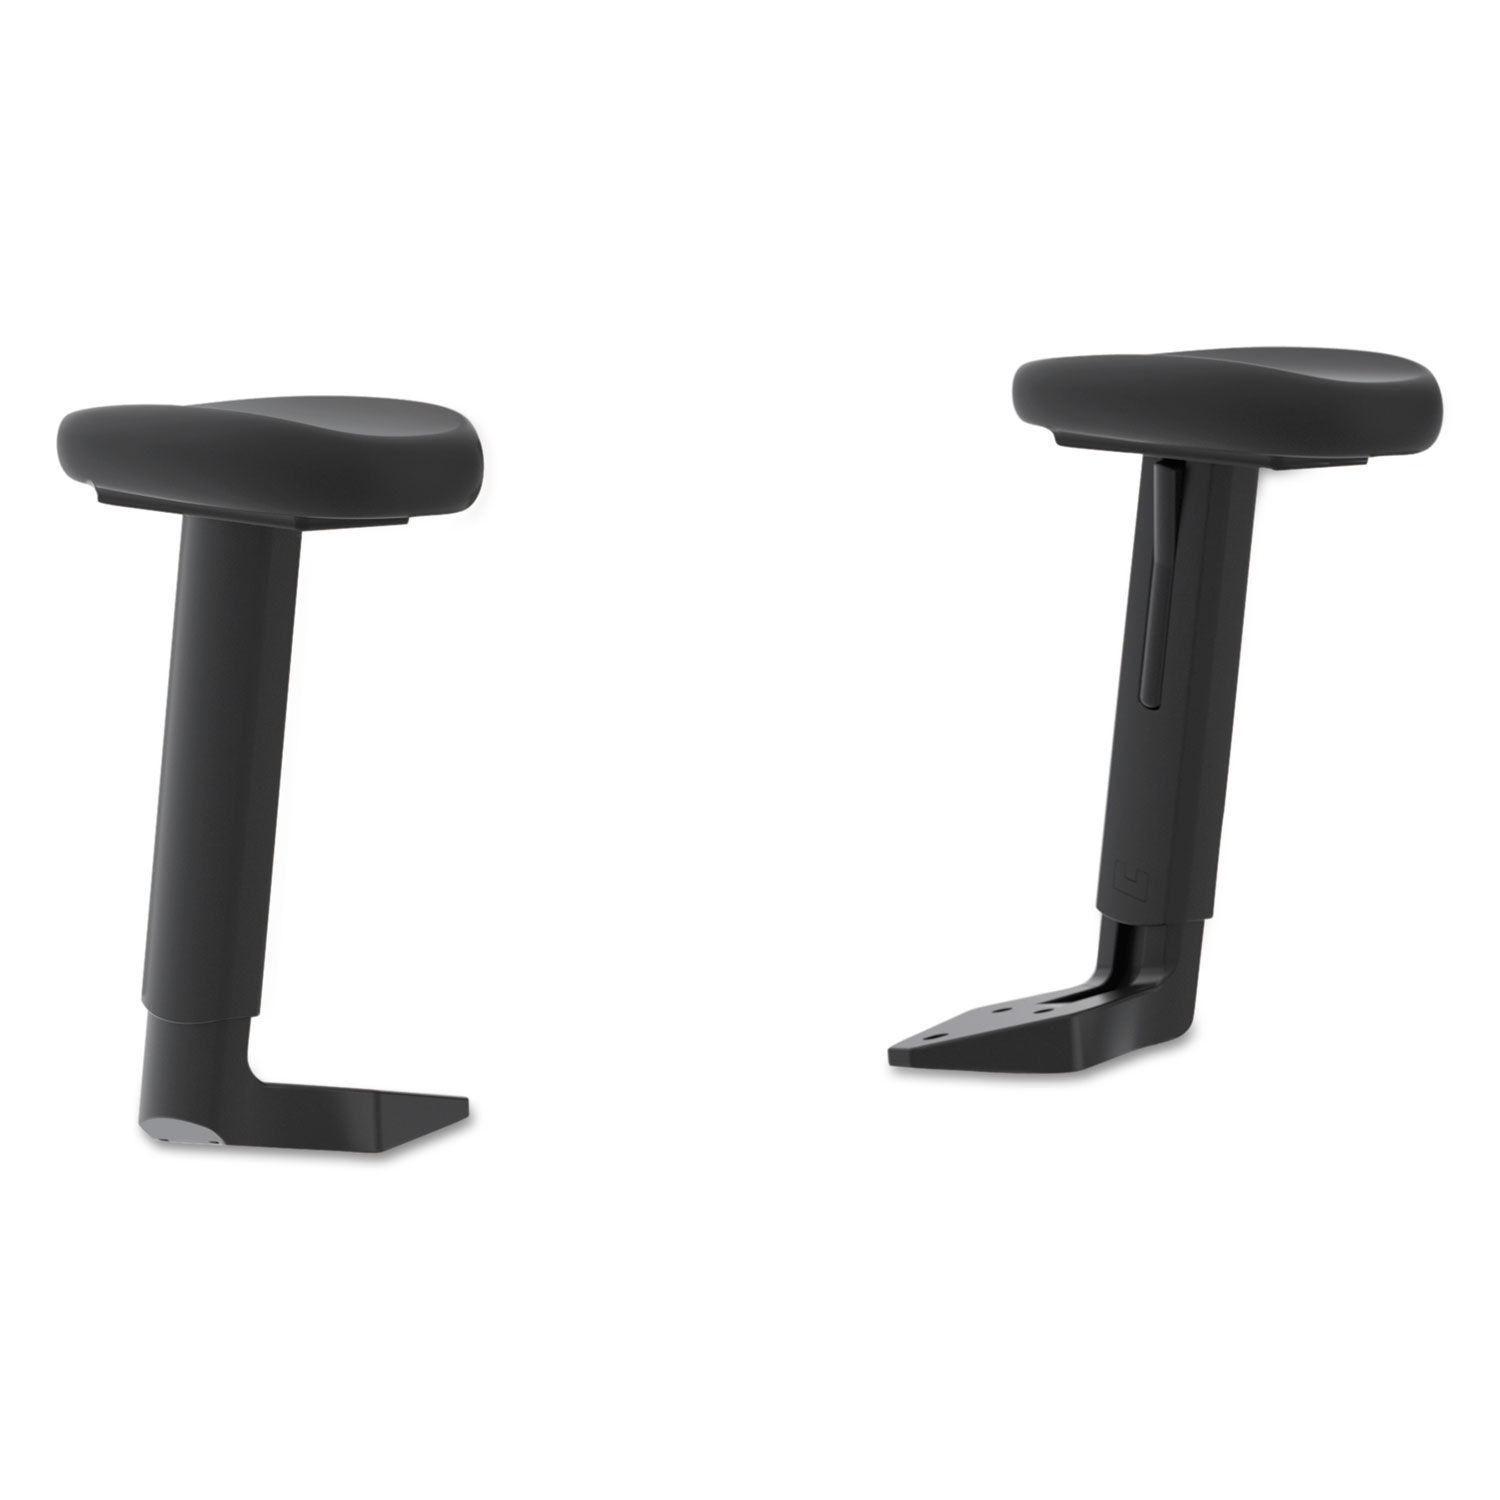 ValuTask Height-Adjustable Arm Kit for HON ValuTask Chairs 4 x 10.25 x 11.88, Black, 2/Set